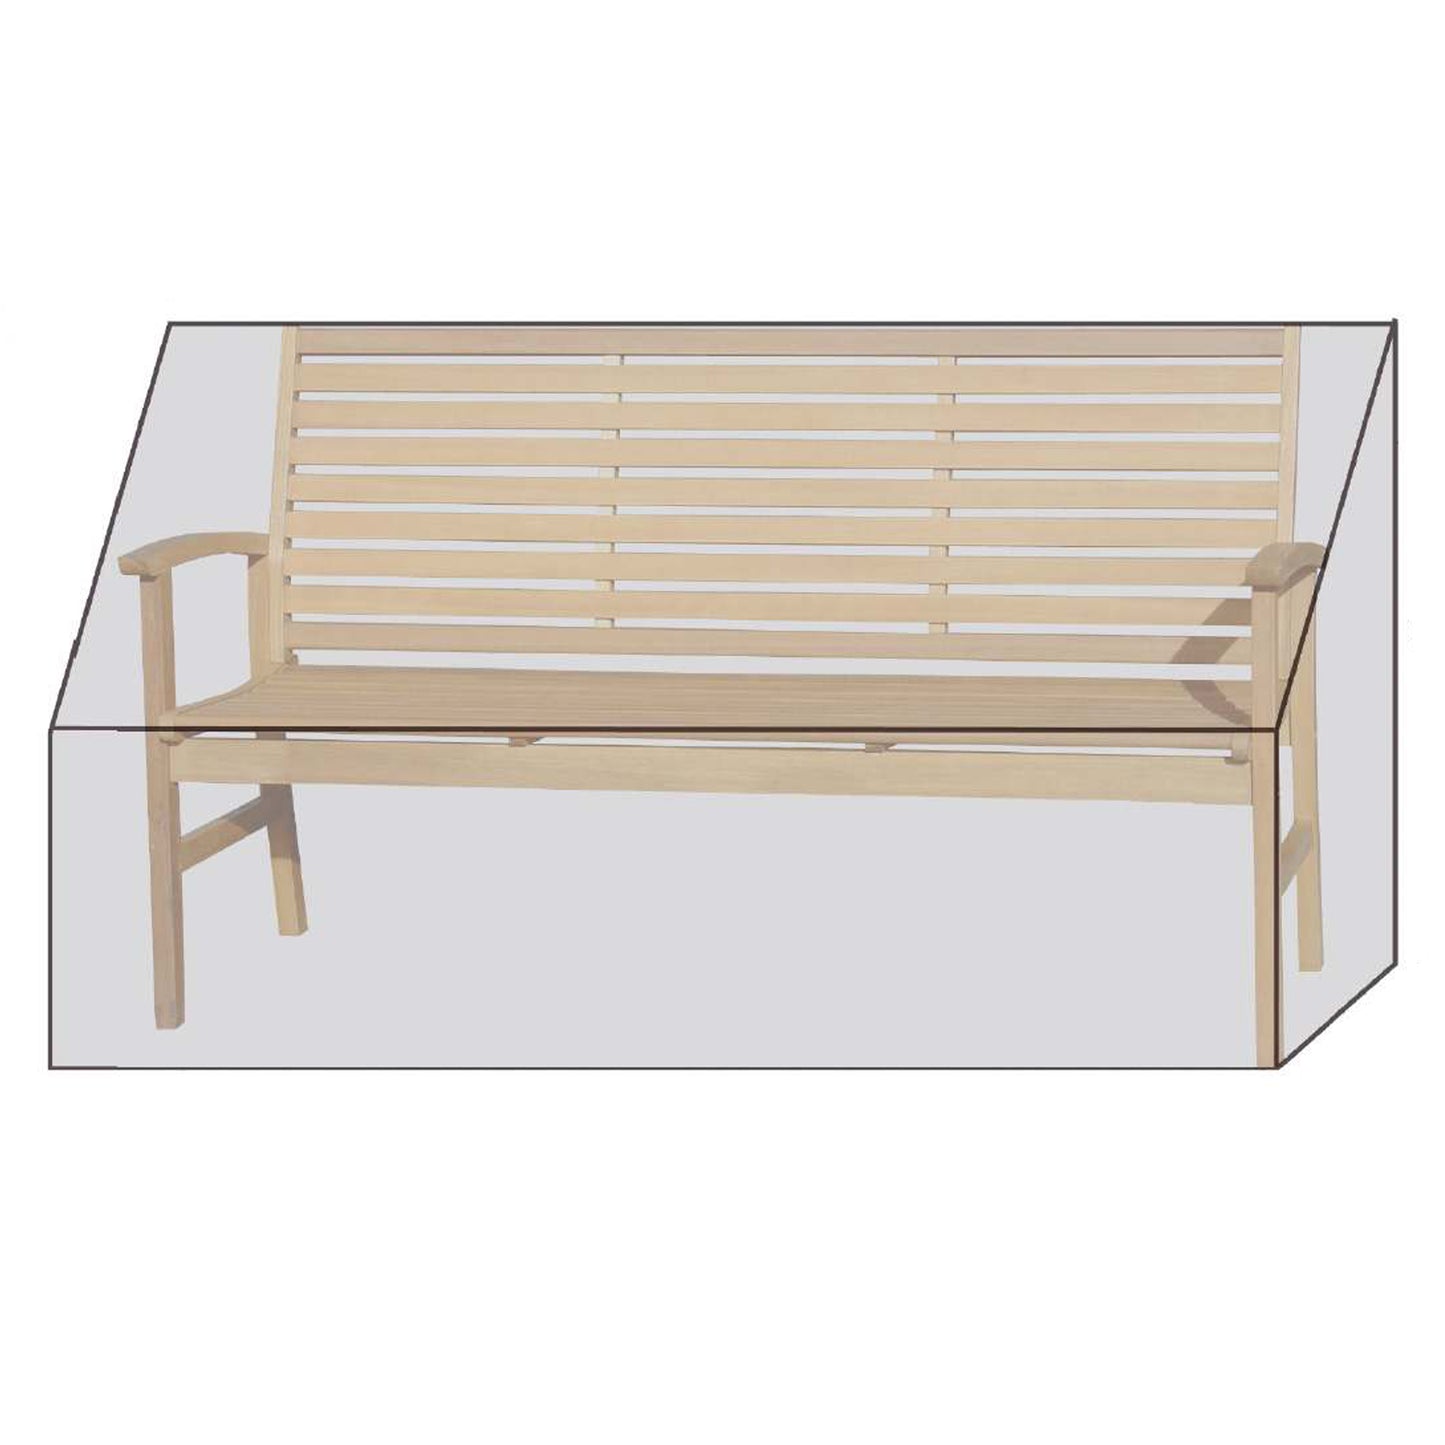 Black Premium Gartenbankhülle  200x70x85cm / garden bench cover /  atmungsaktiv / breathable